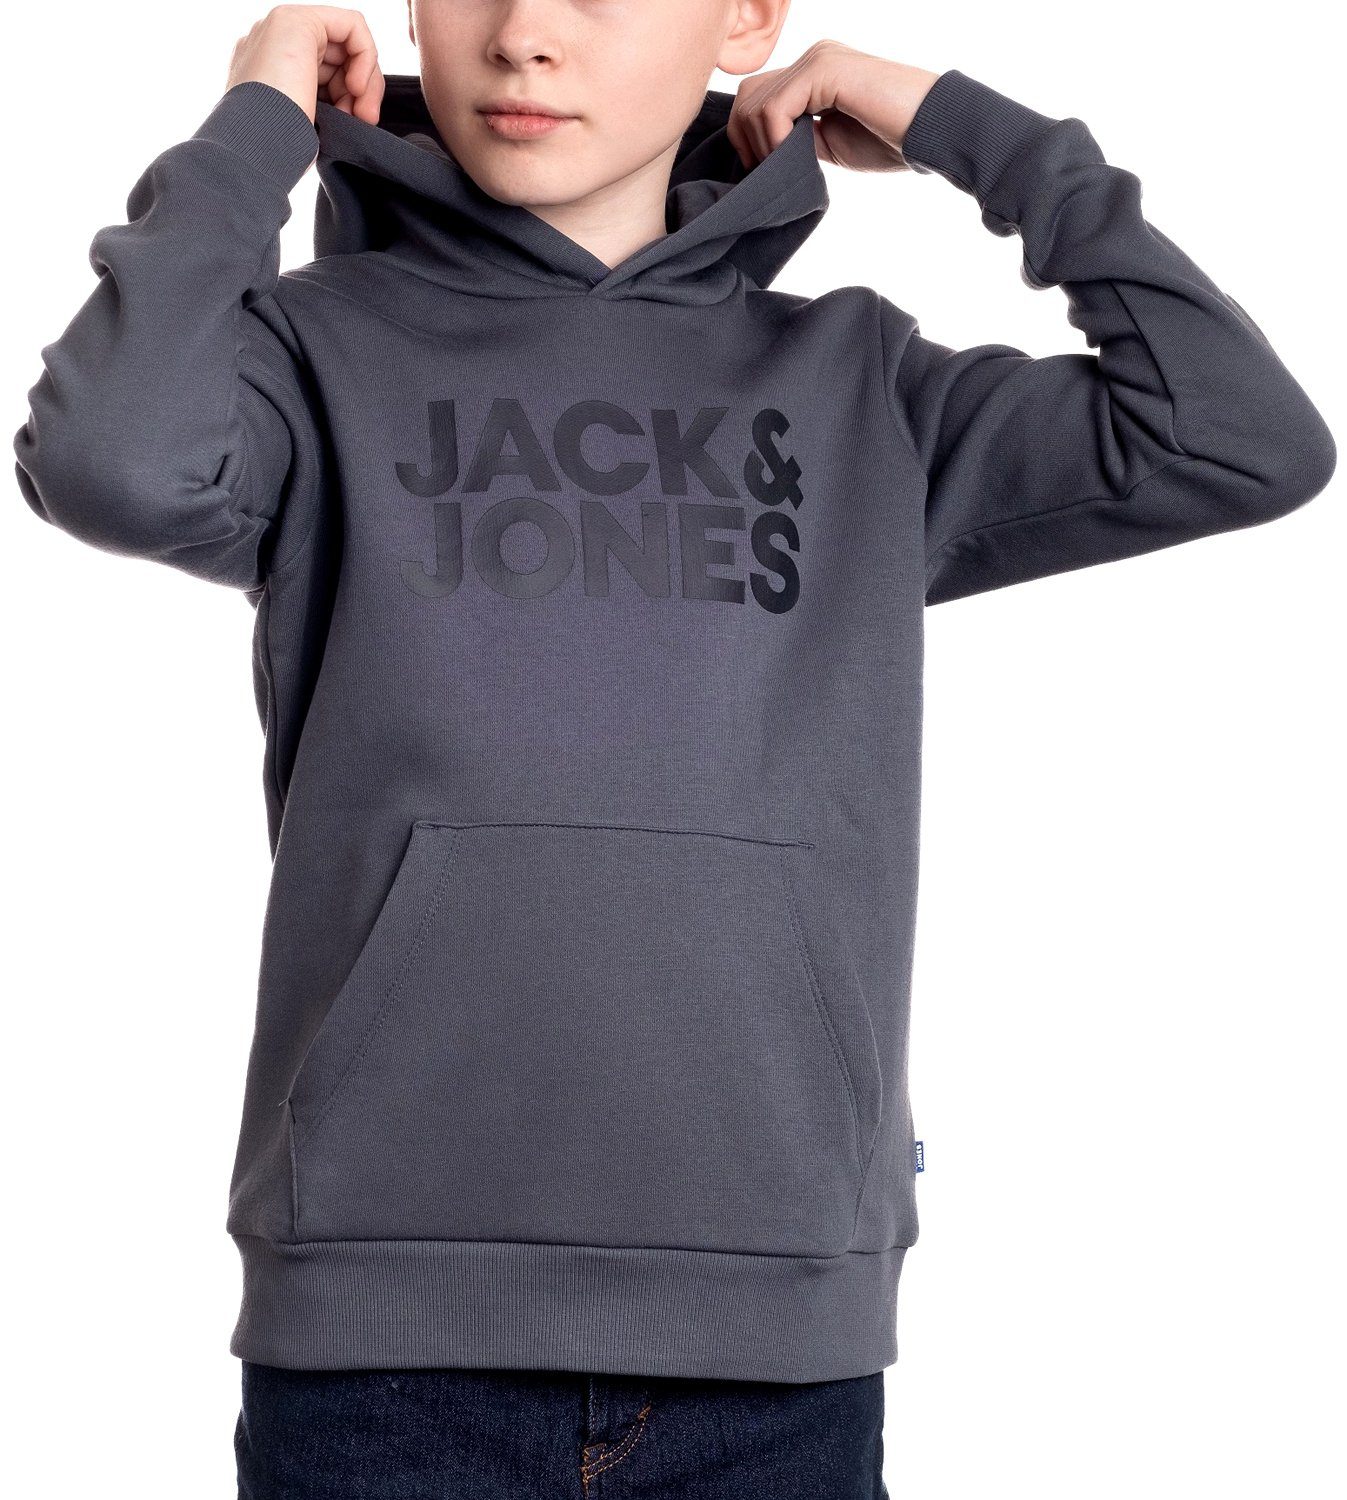 Doppelpack) mit Kapuzenpullover Doppelpack Pullover 18 Junior Set, Mix Jones & (Spar Jack Printaufdruck